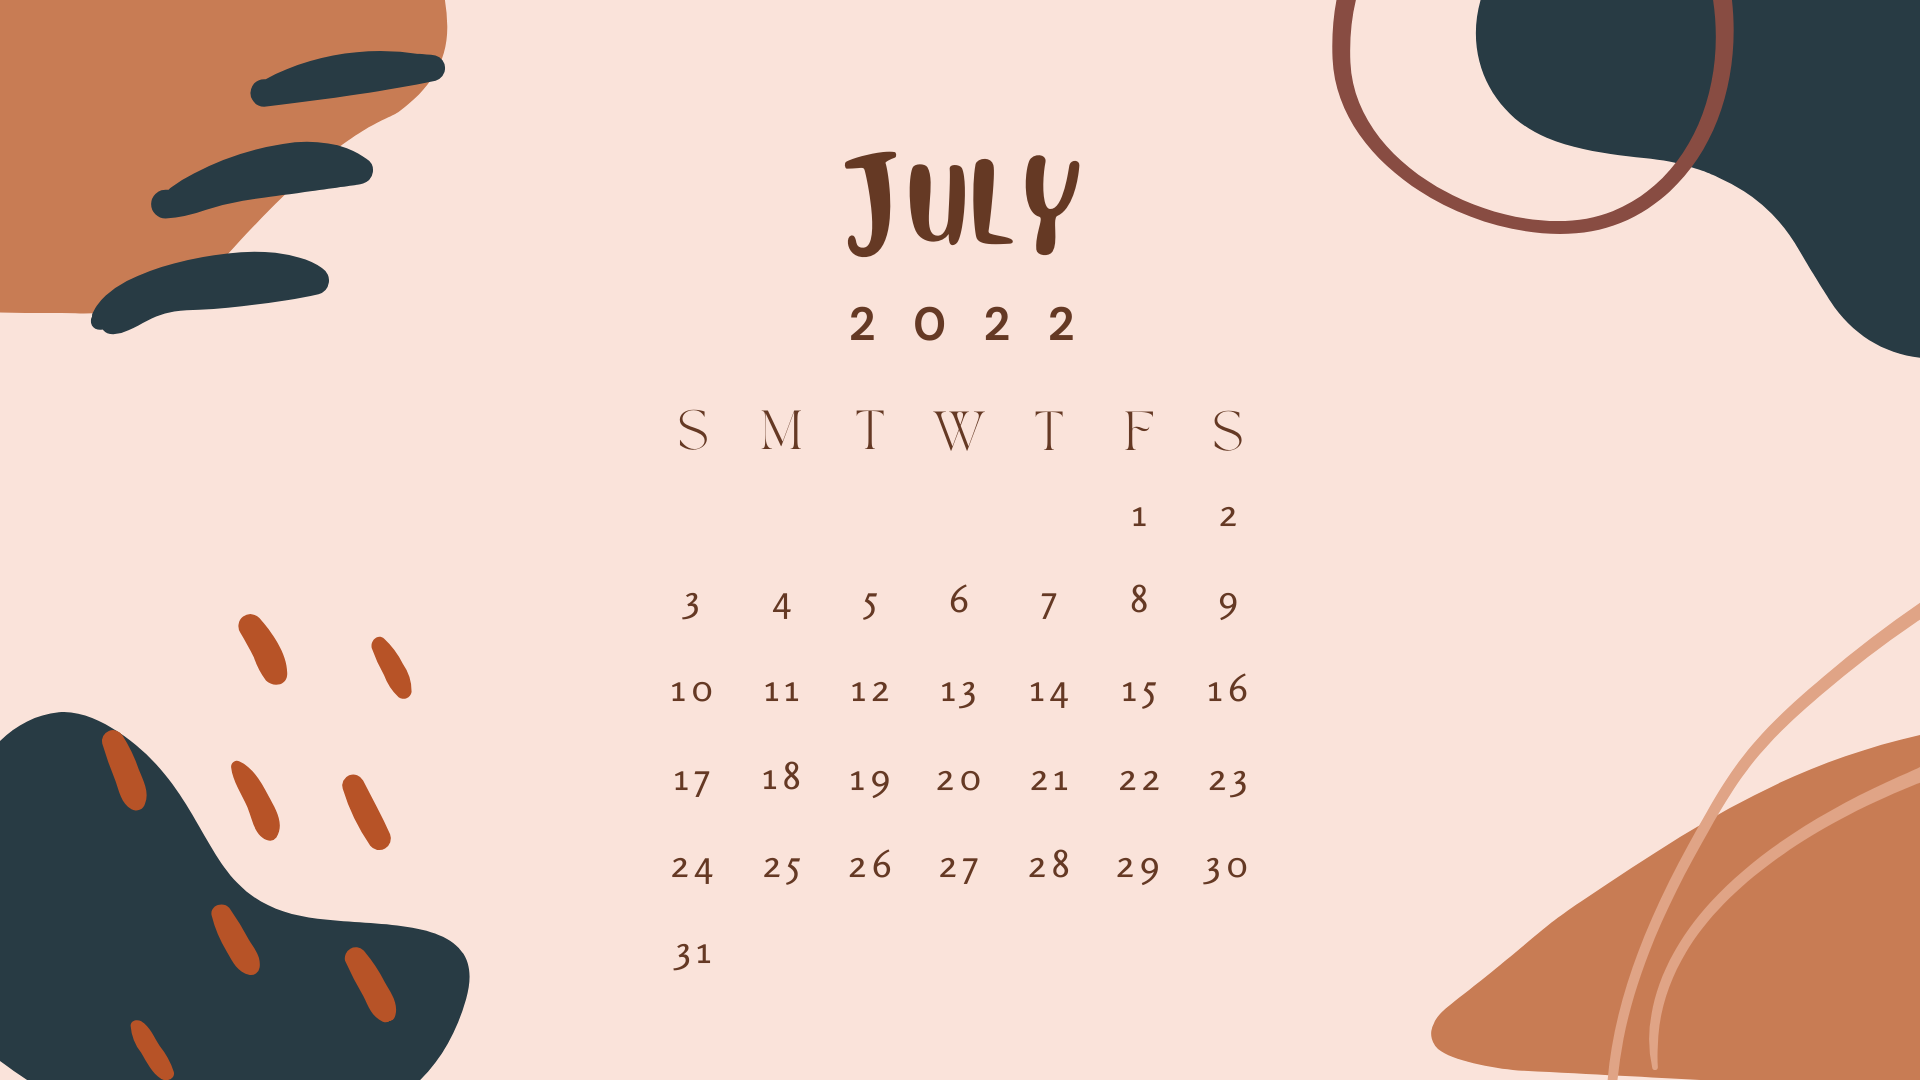 Free July 2022 Desktop Calendar Backgrounds - Nikki's Plate